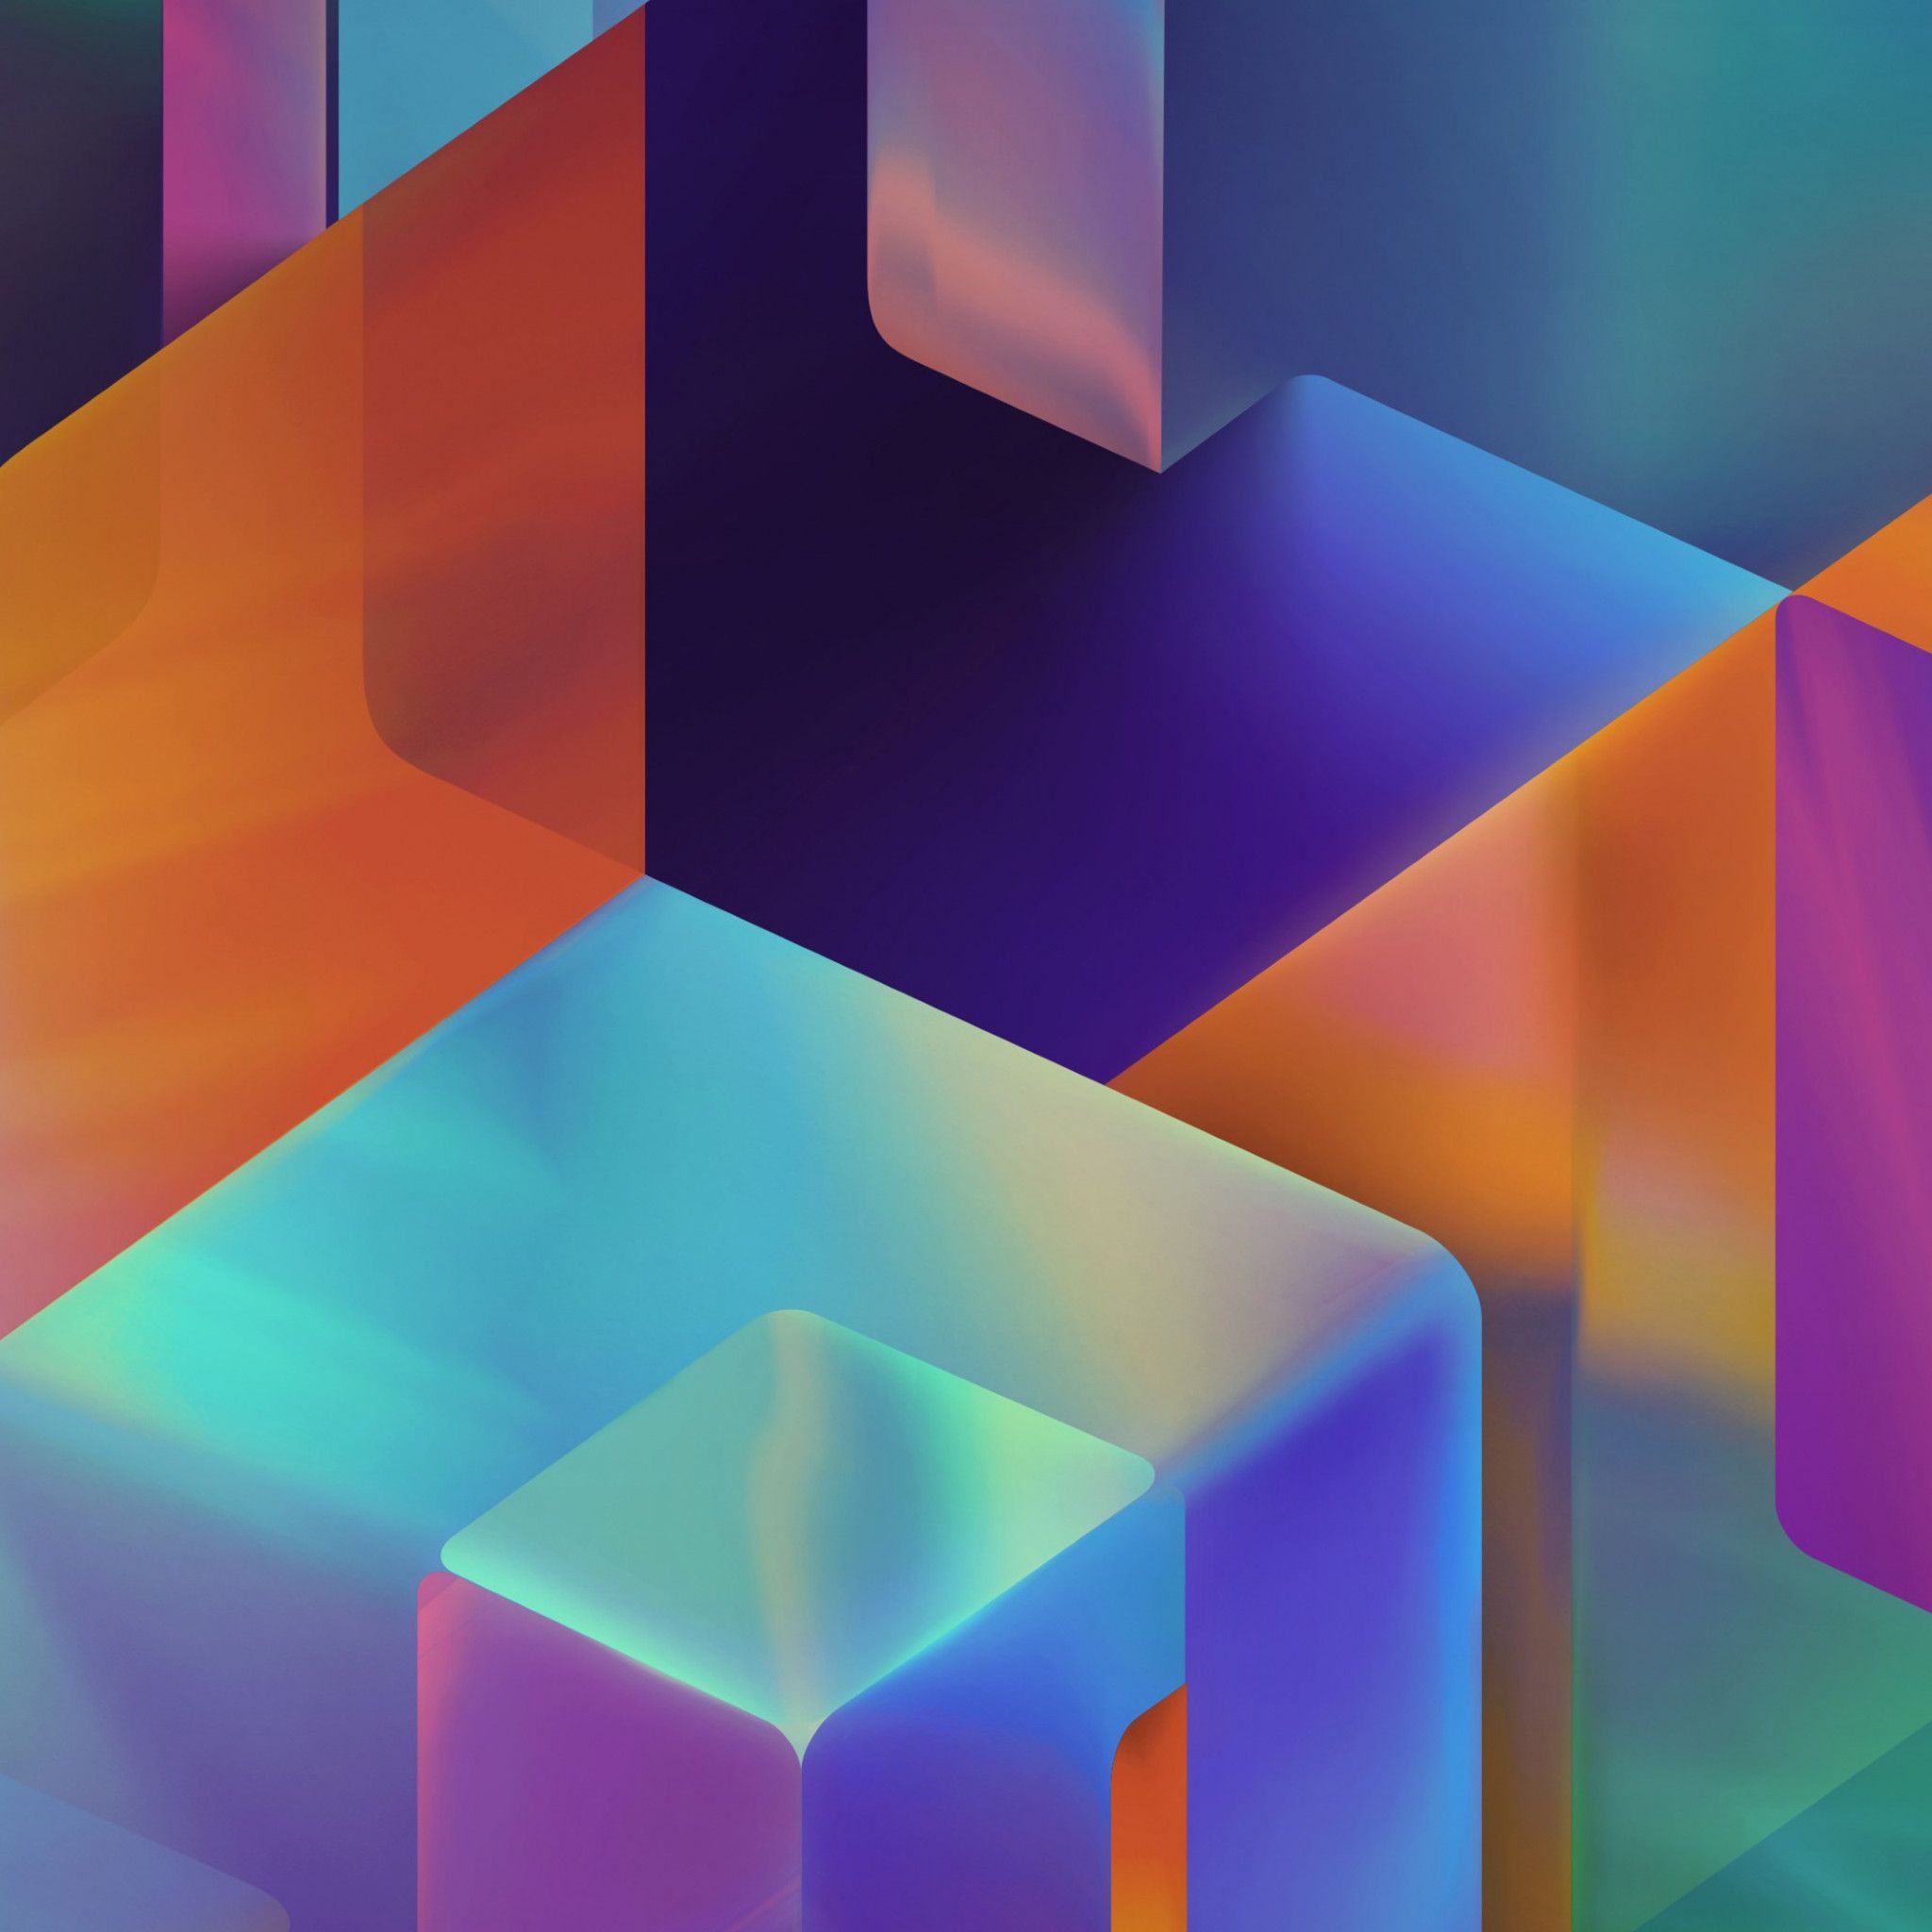 Download wallpaper: Geometric 3D shapes 2048x2048